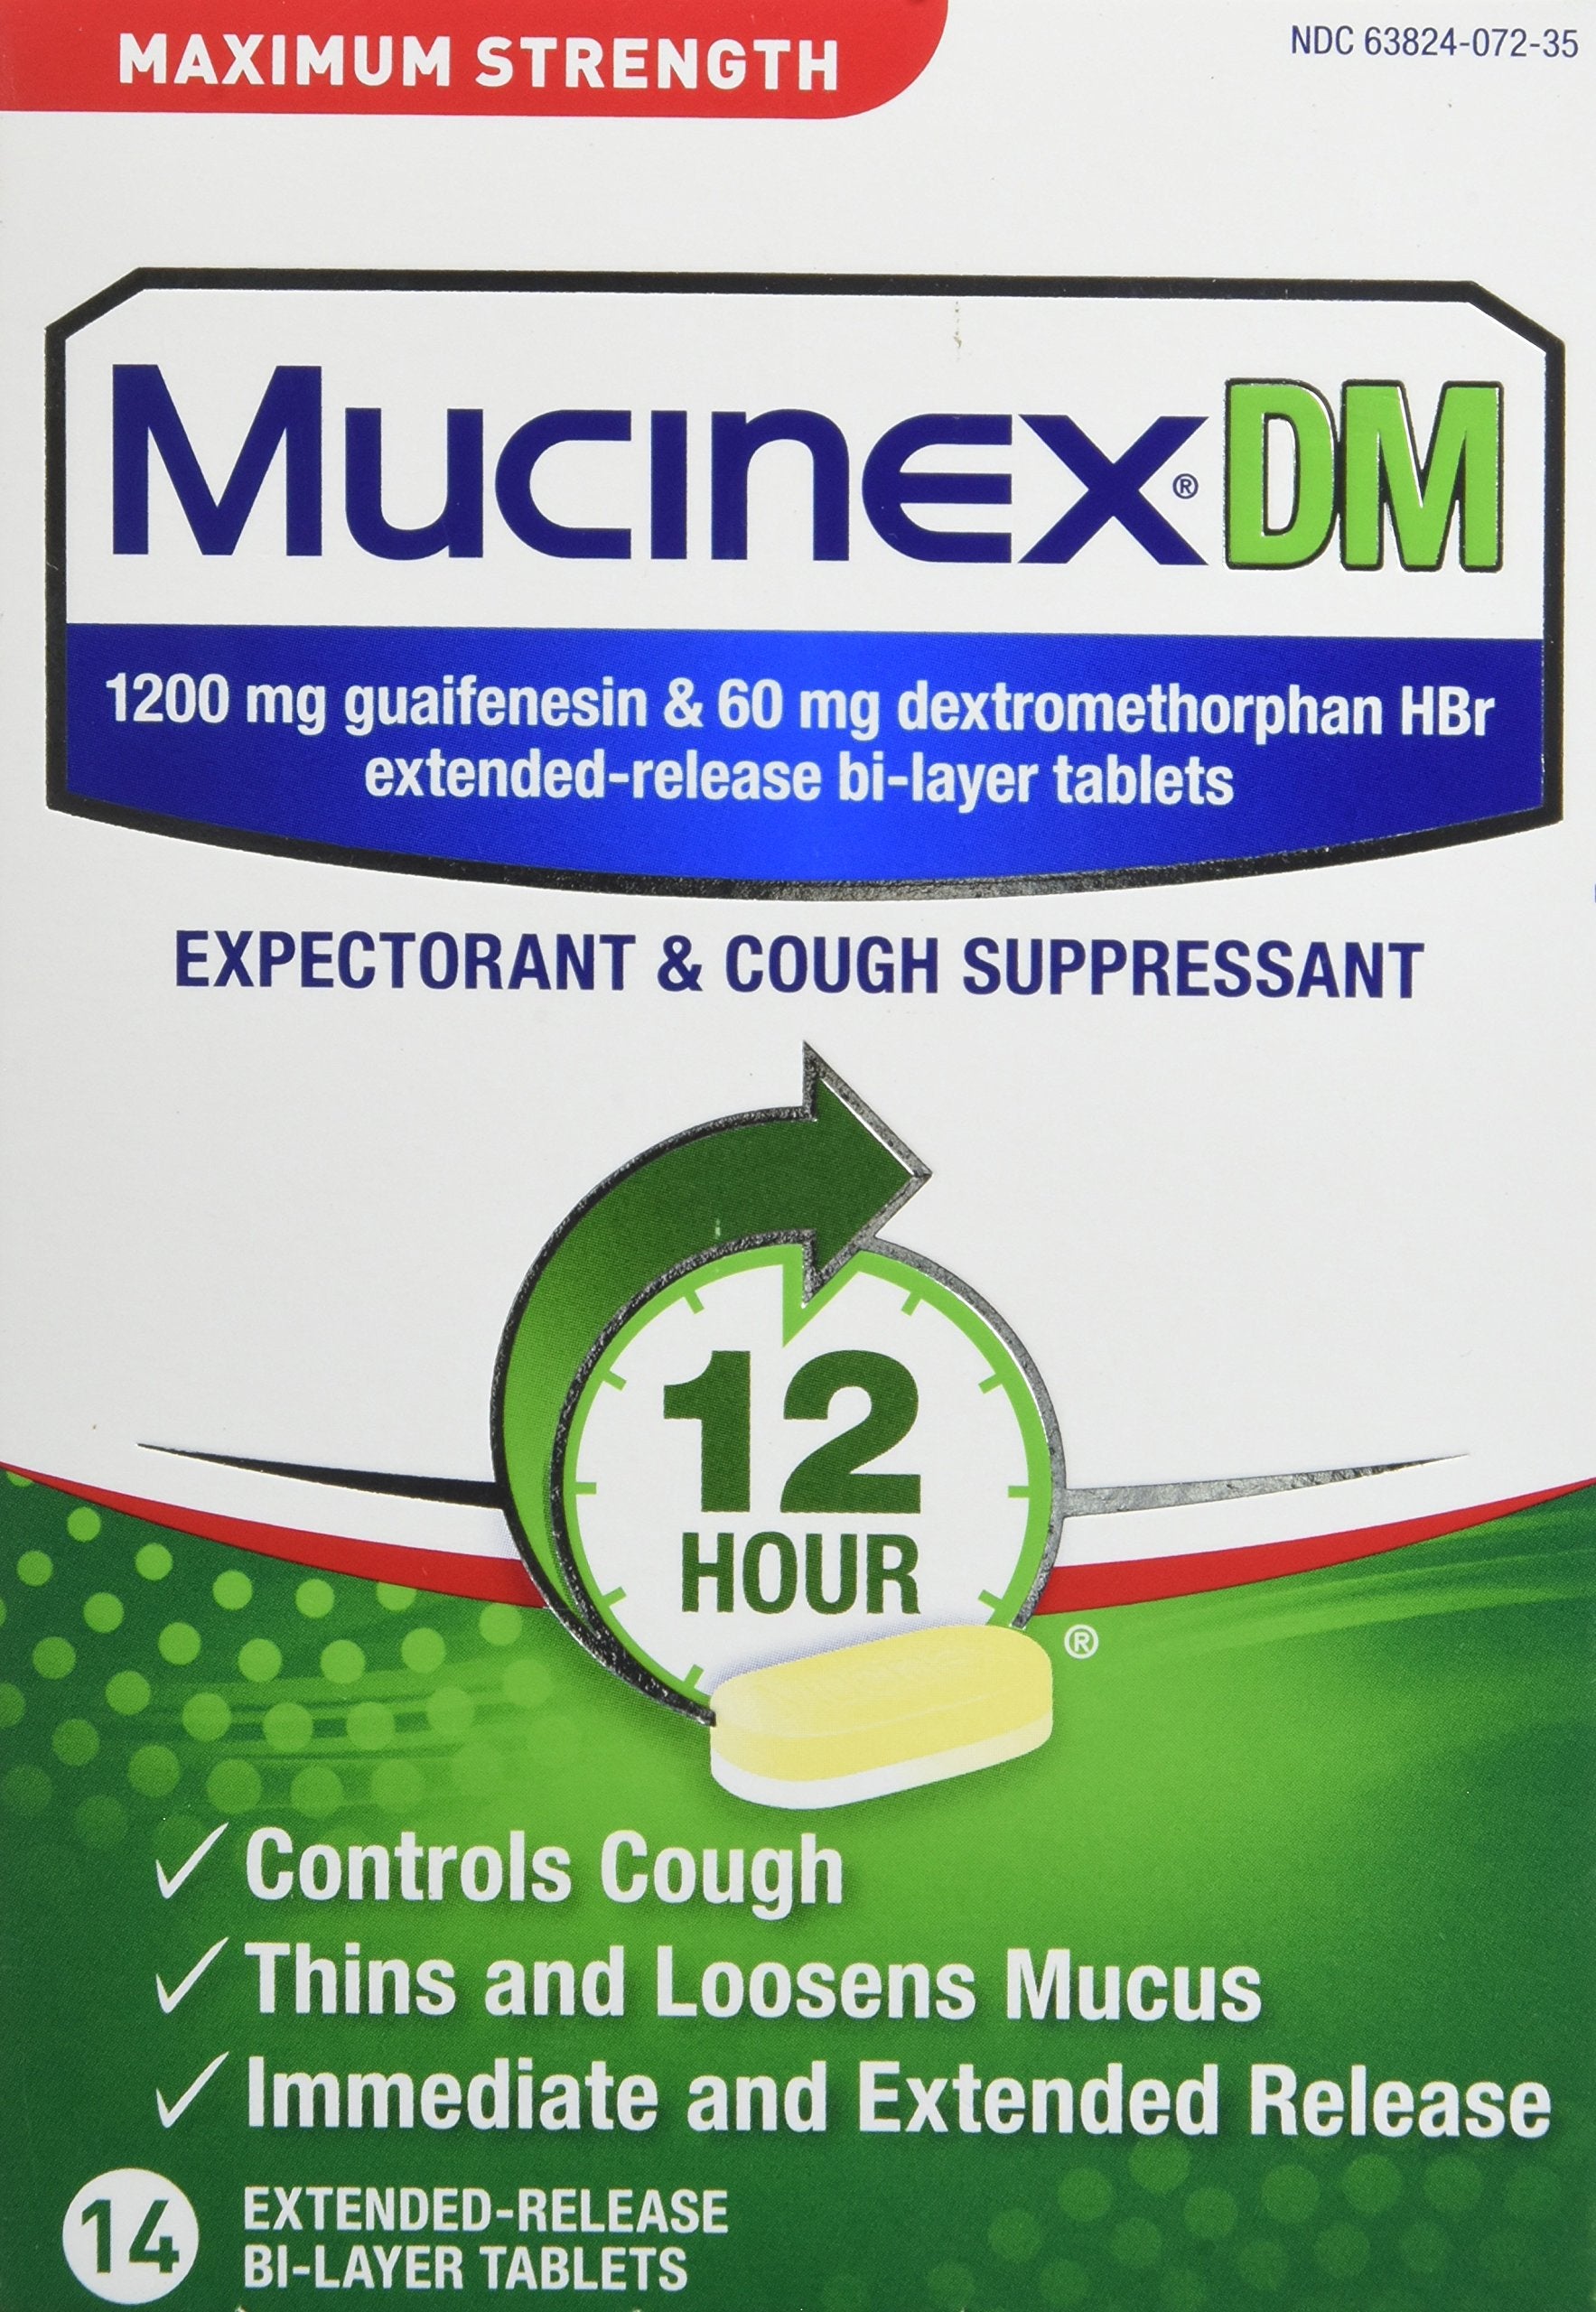 mucinex logo